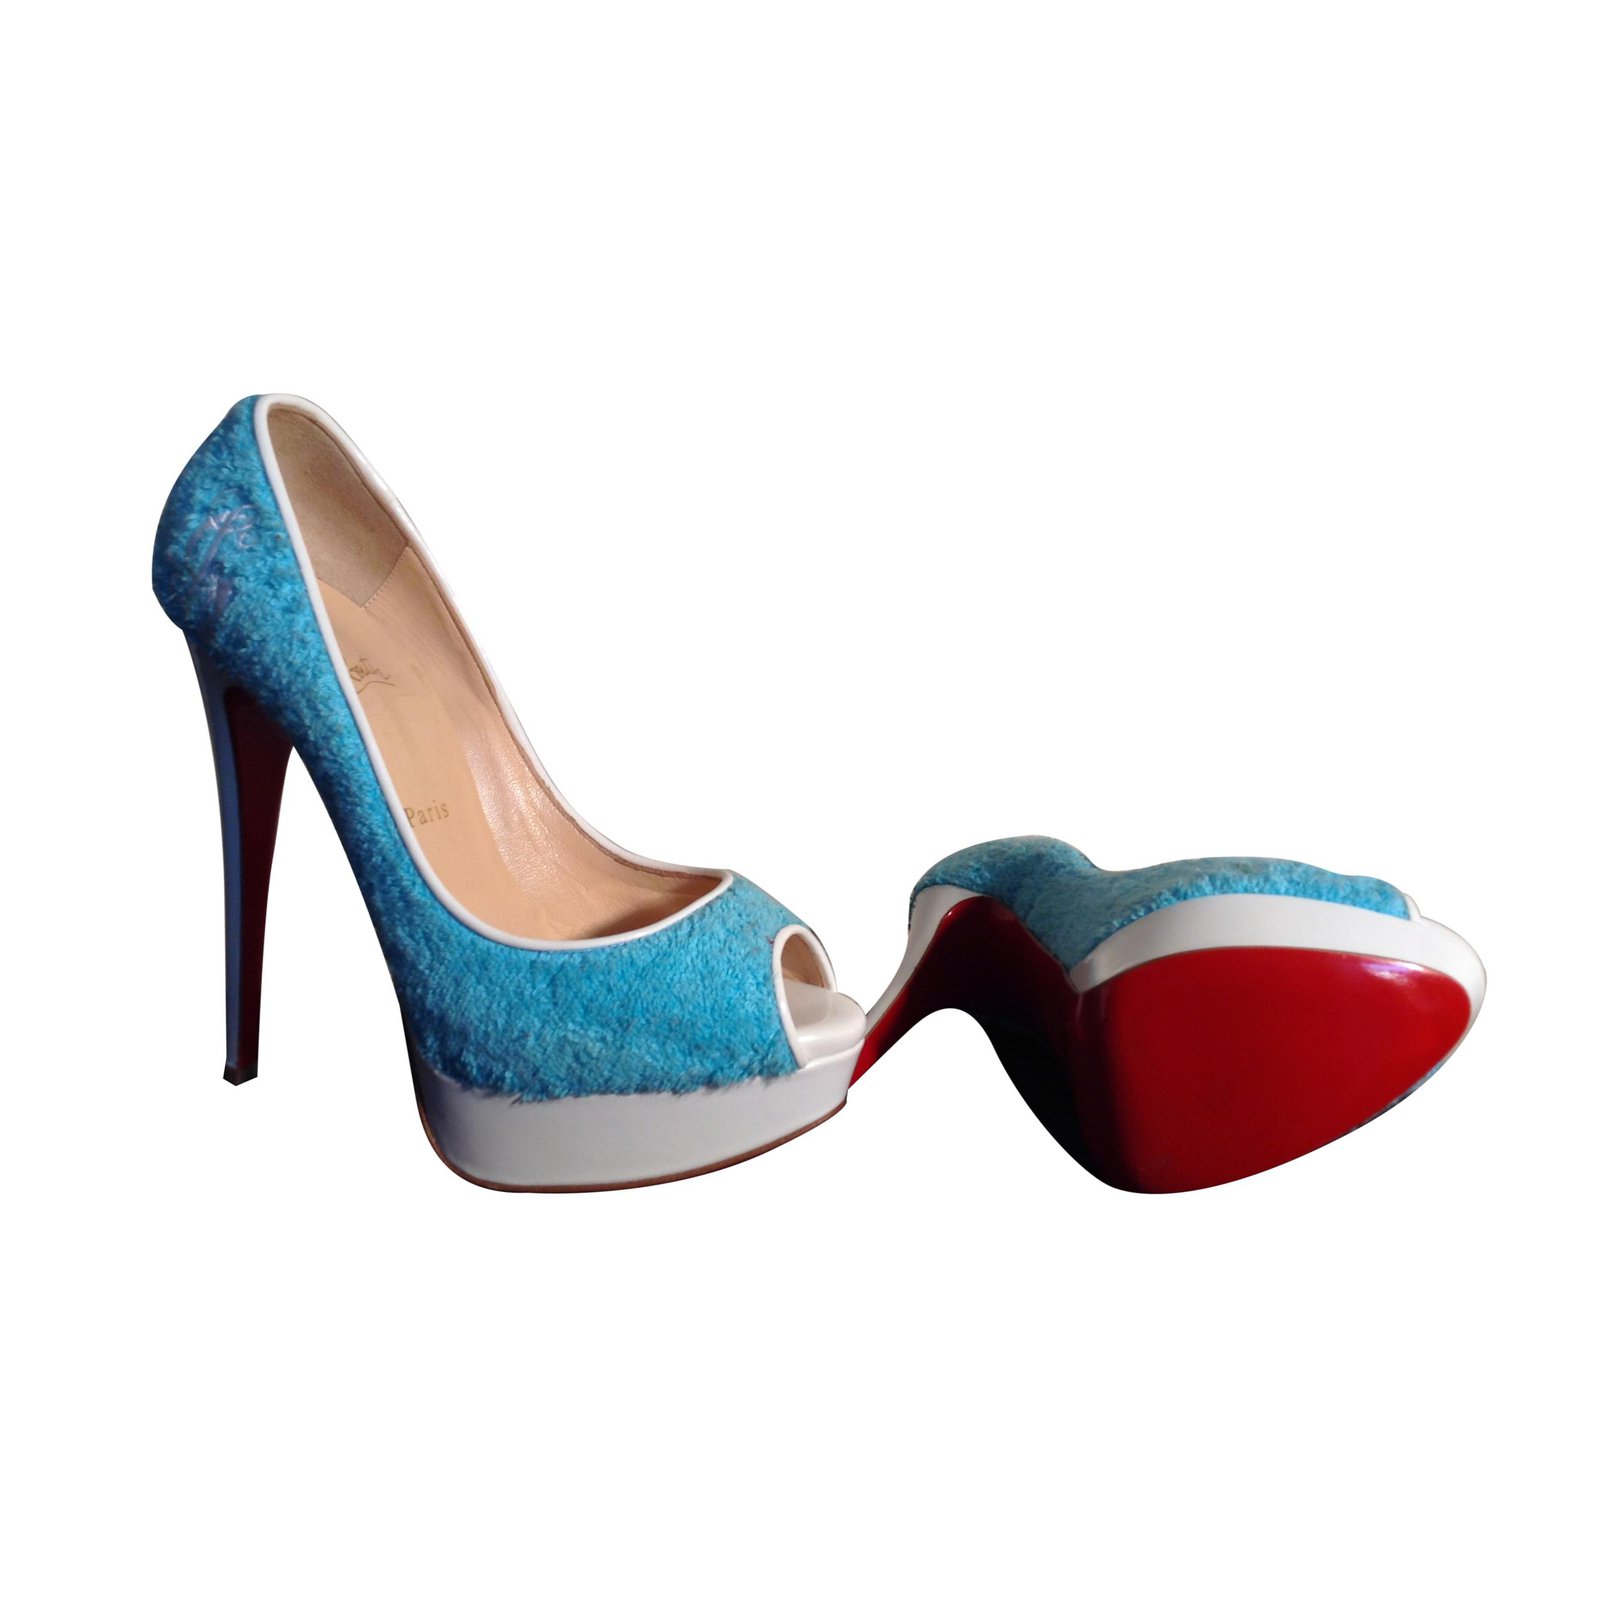 christian louboutin blue heels